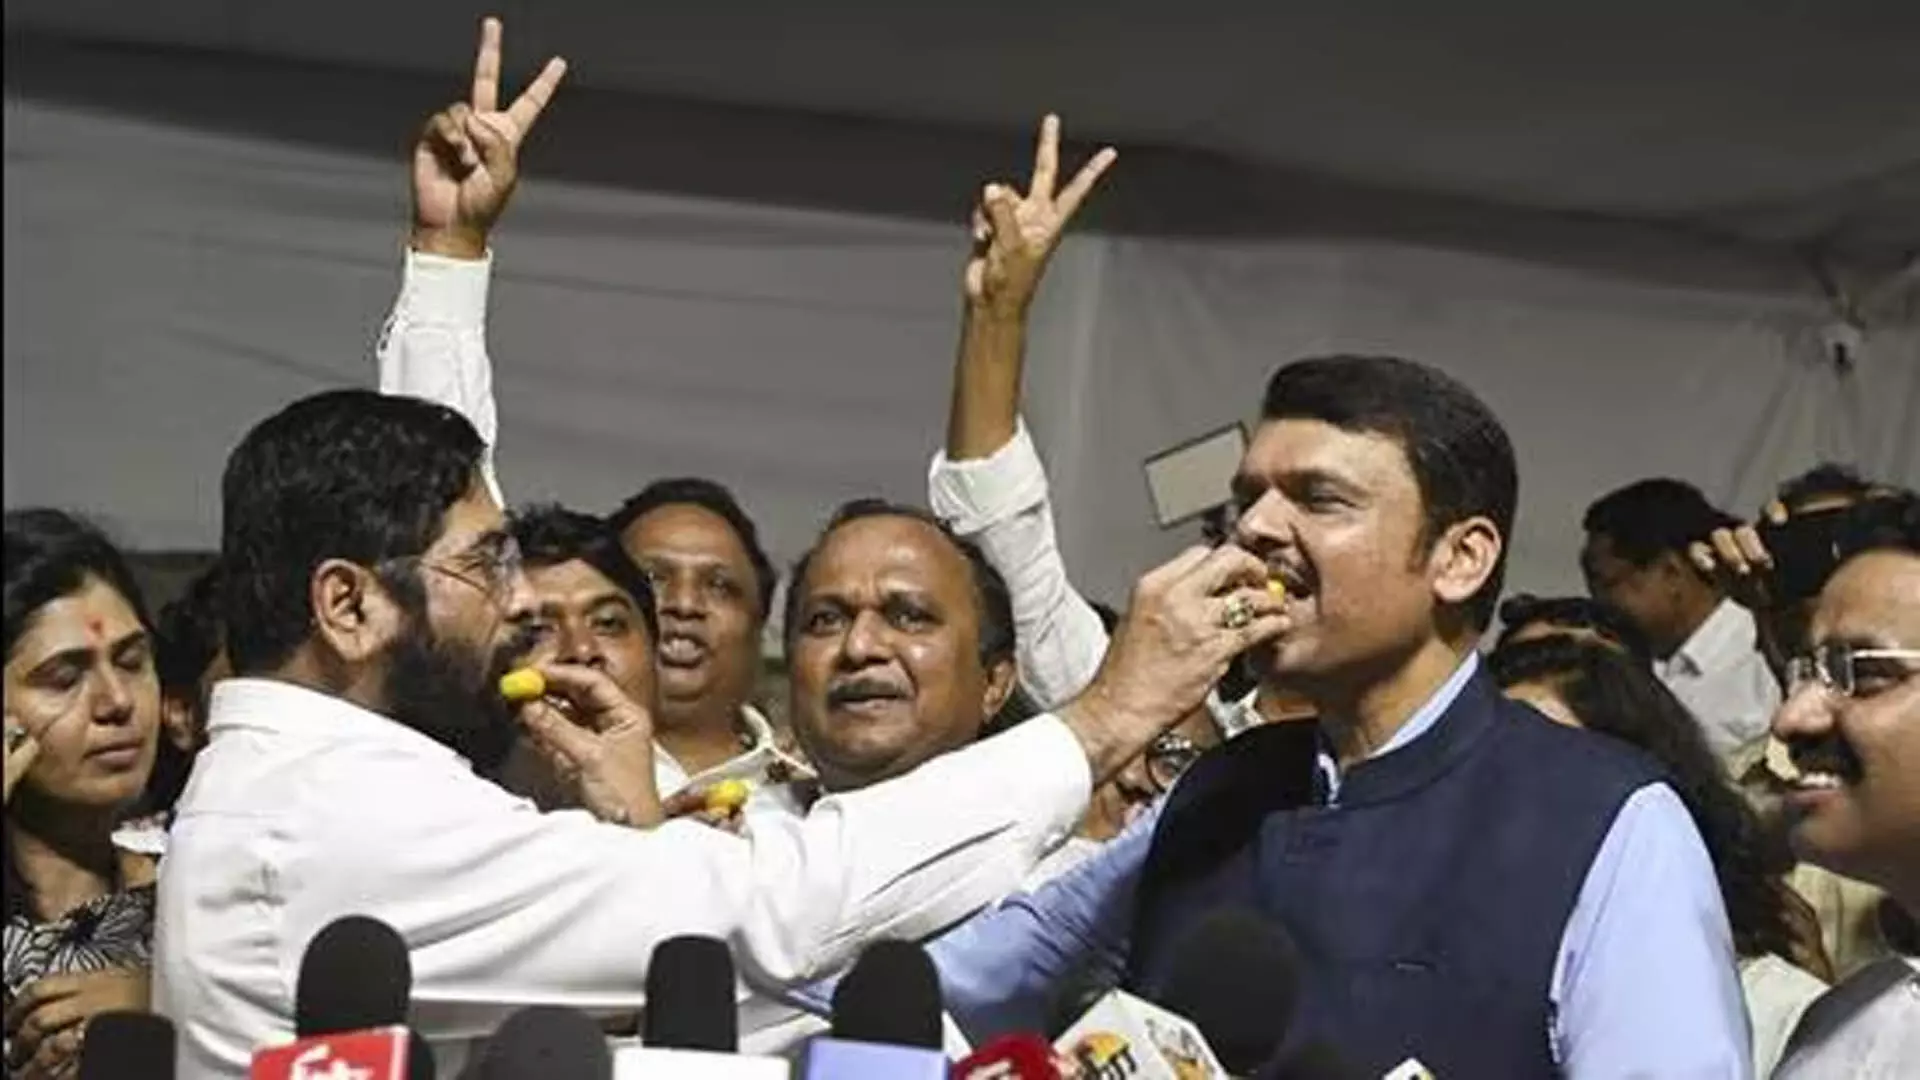 MUMBAI: सत्तारूढ़ गठबंधन महायुति ने अपना रुख बदला